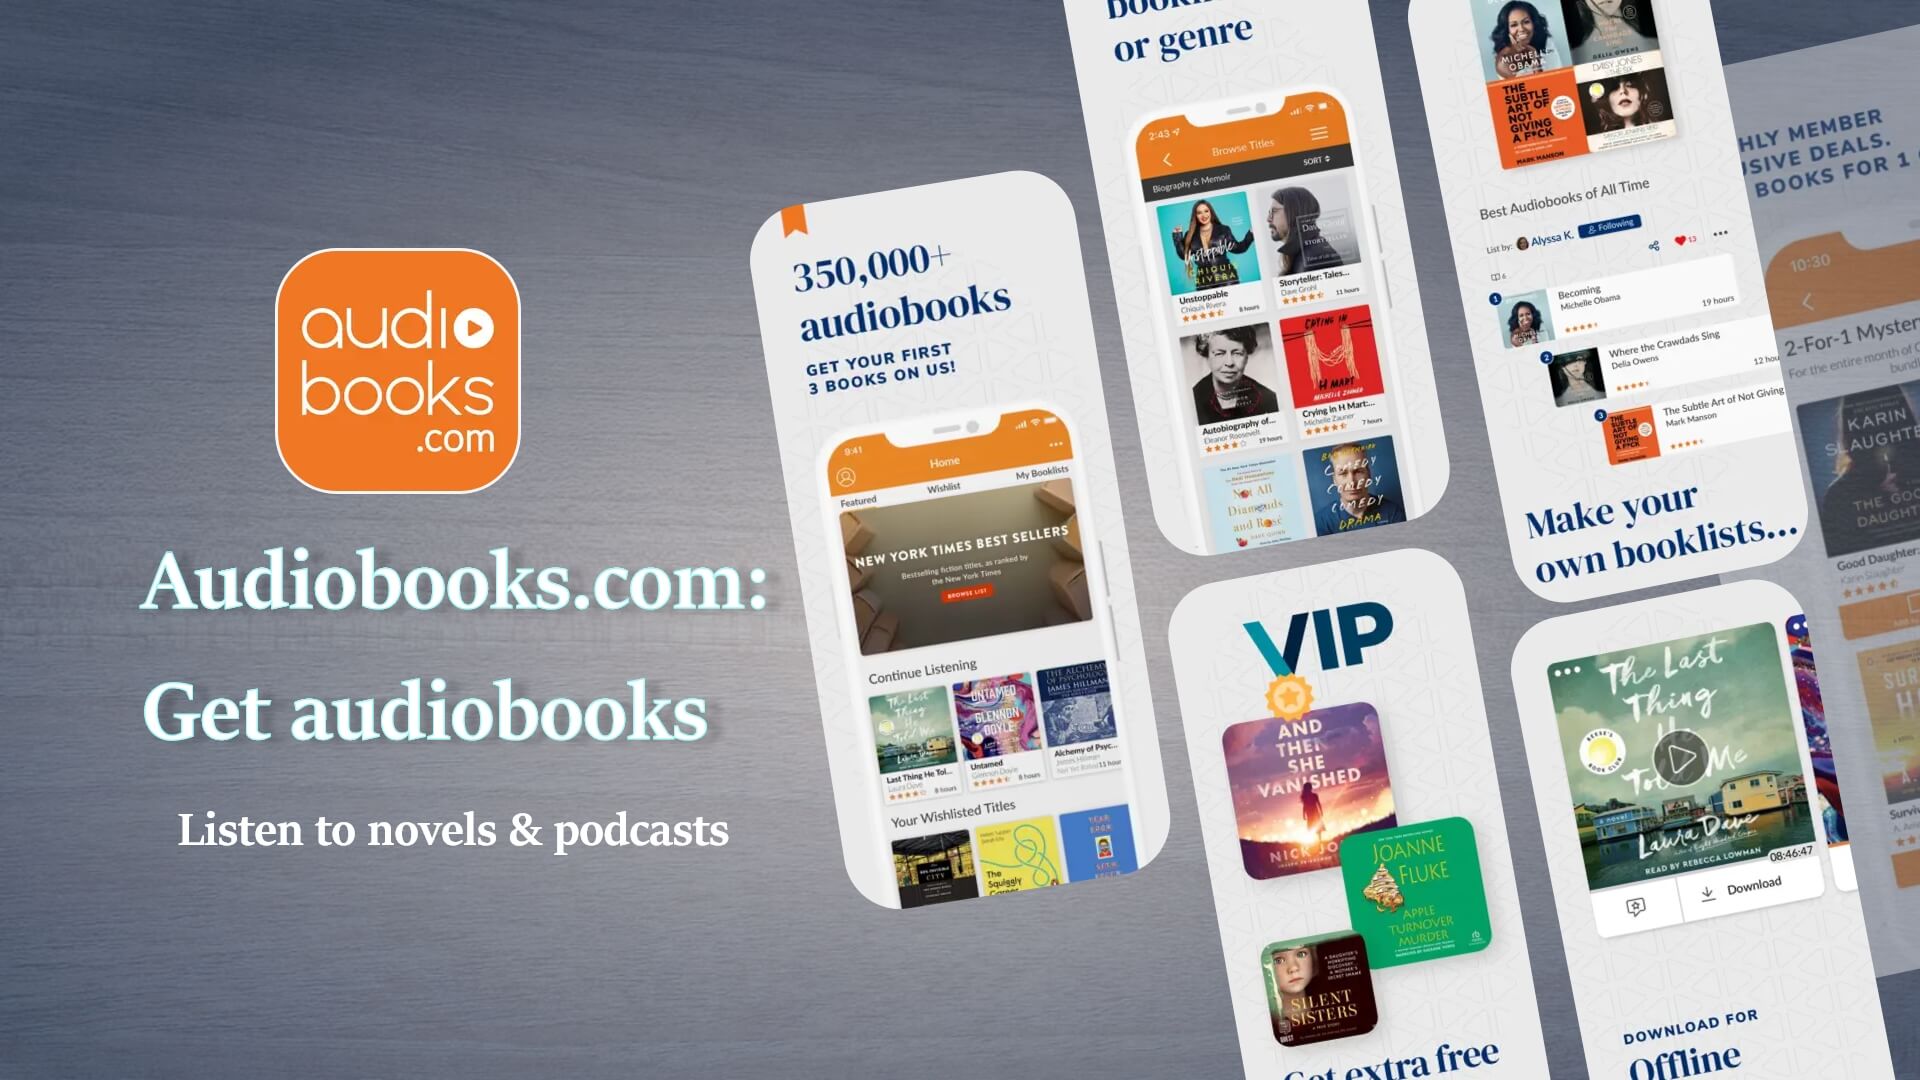 Audiobooks.com Get audiobooks